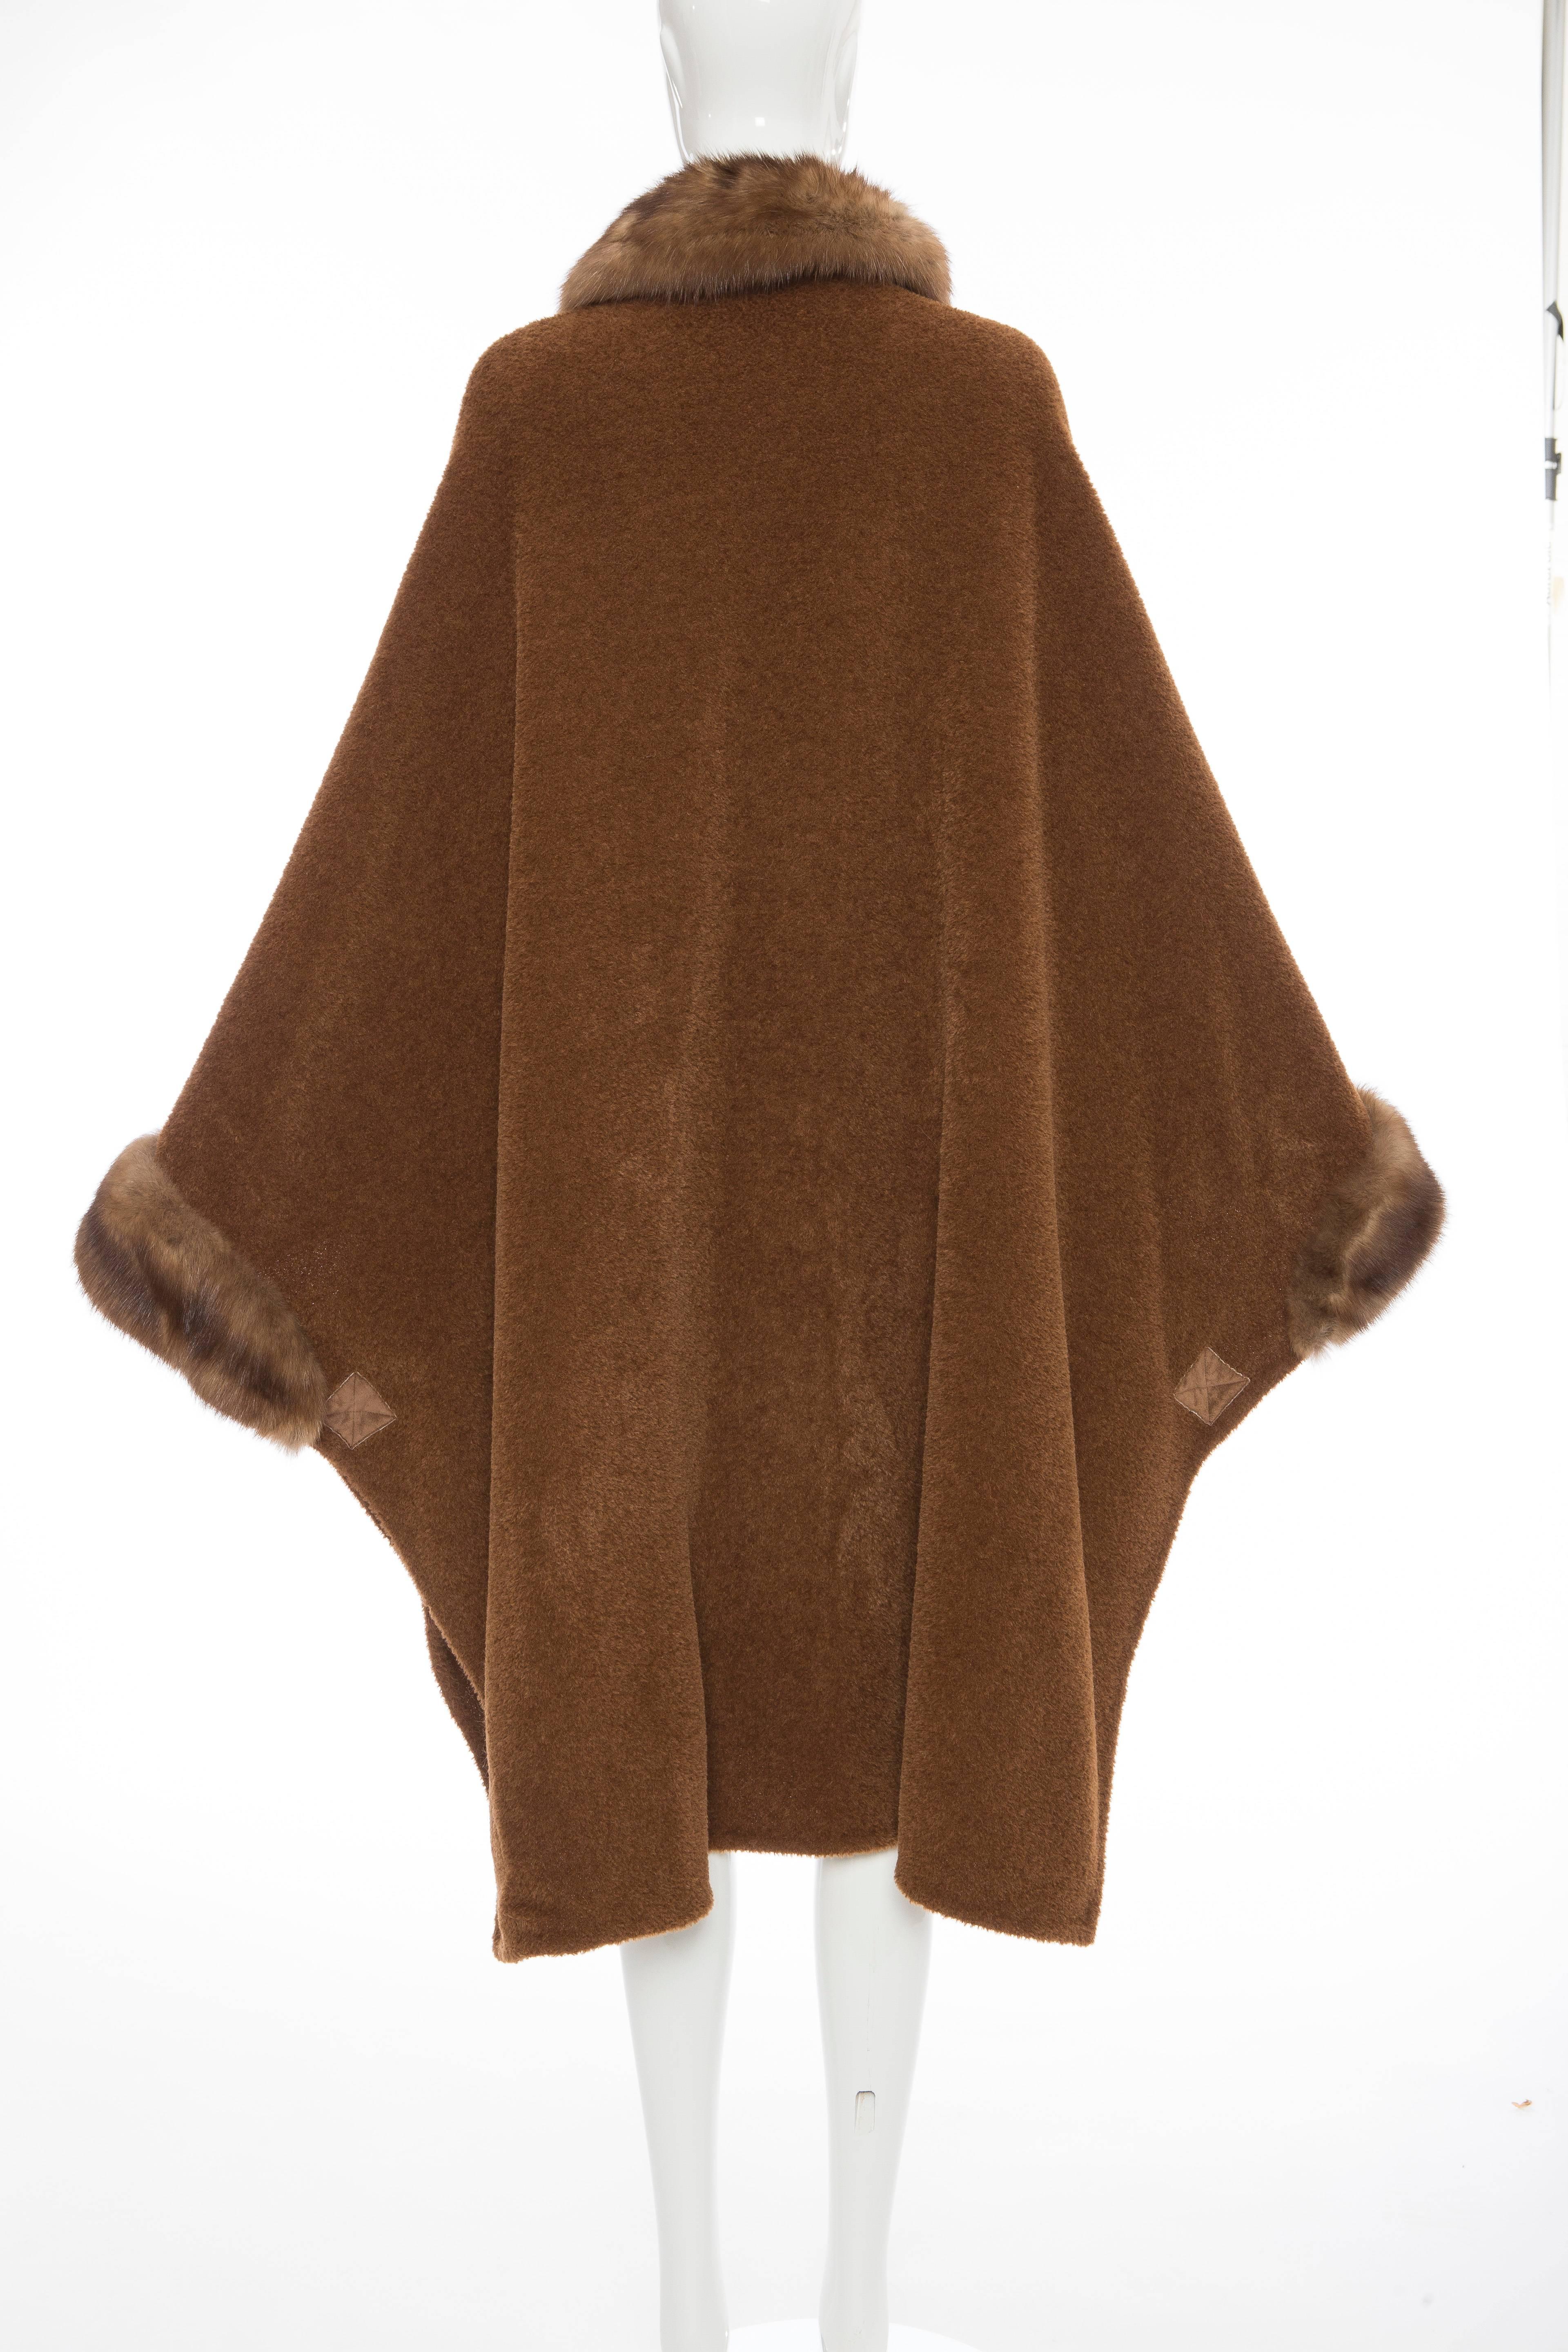 Revillon Alpaca Button Front Cloak - Cape With Sable Trim, Late 20th Century 1